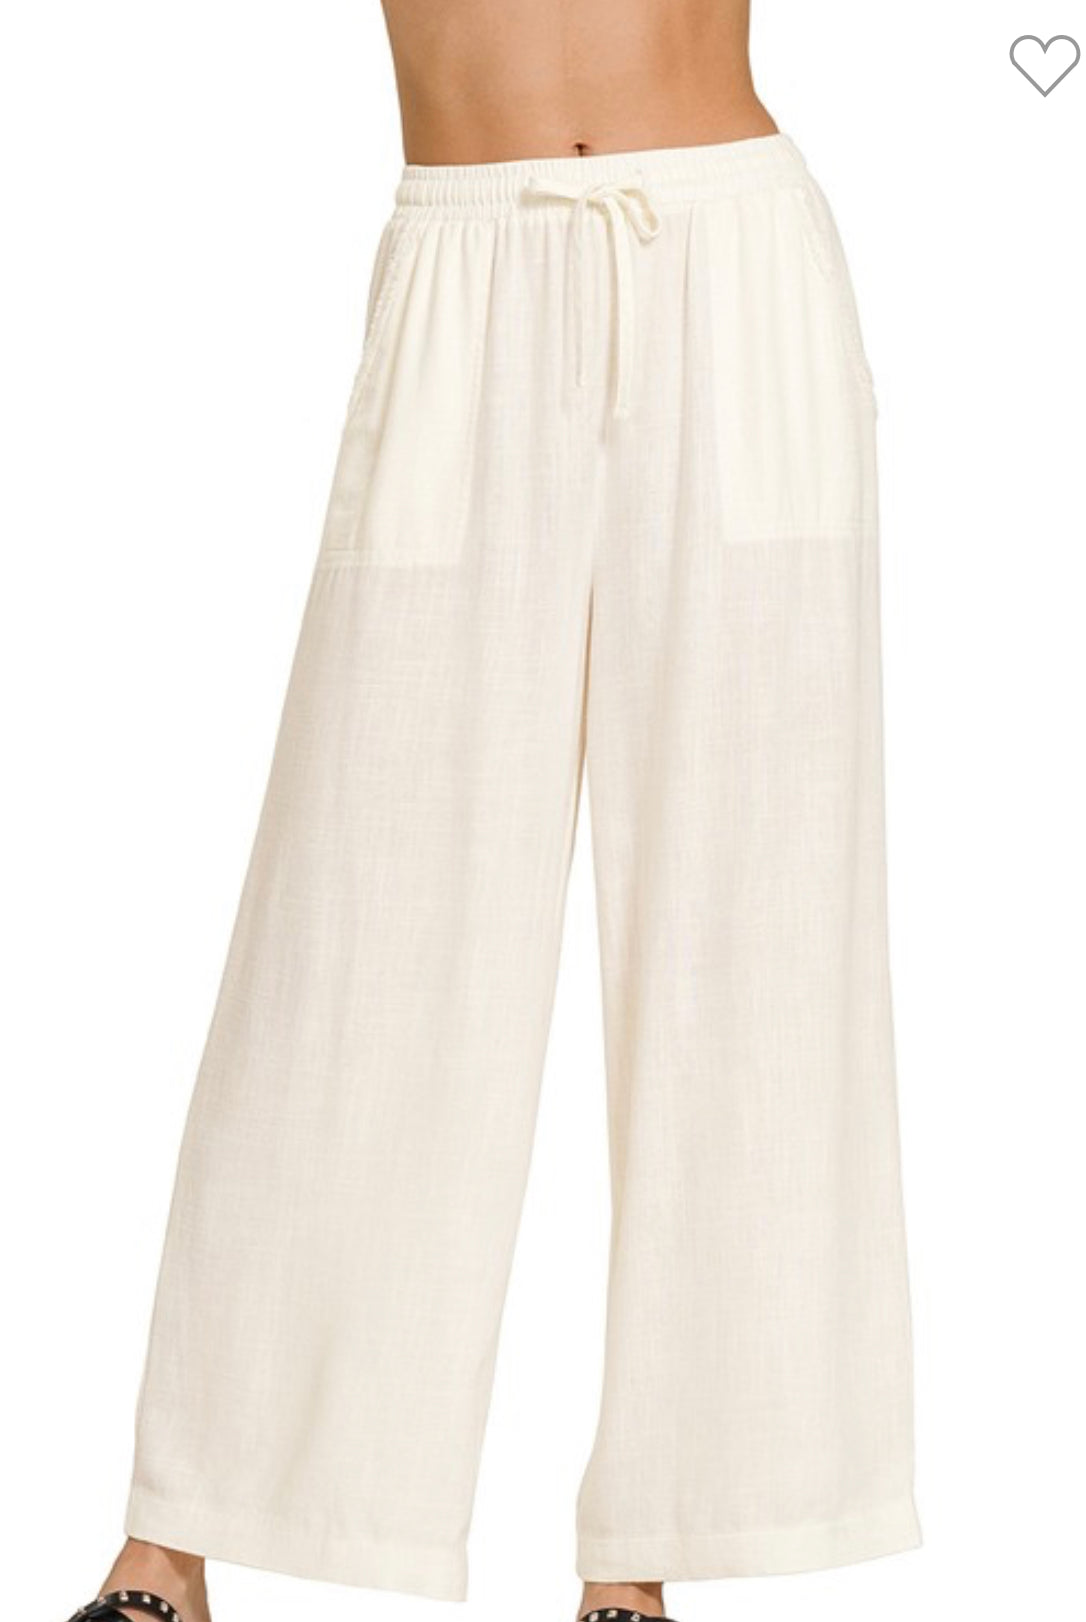 Ivory Wide Leg Linen Blend Pants-Pants-Zenana-Stuffology - Where Vintage Meets Modern, A Boutique for Real Women in Crosbyton, TX